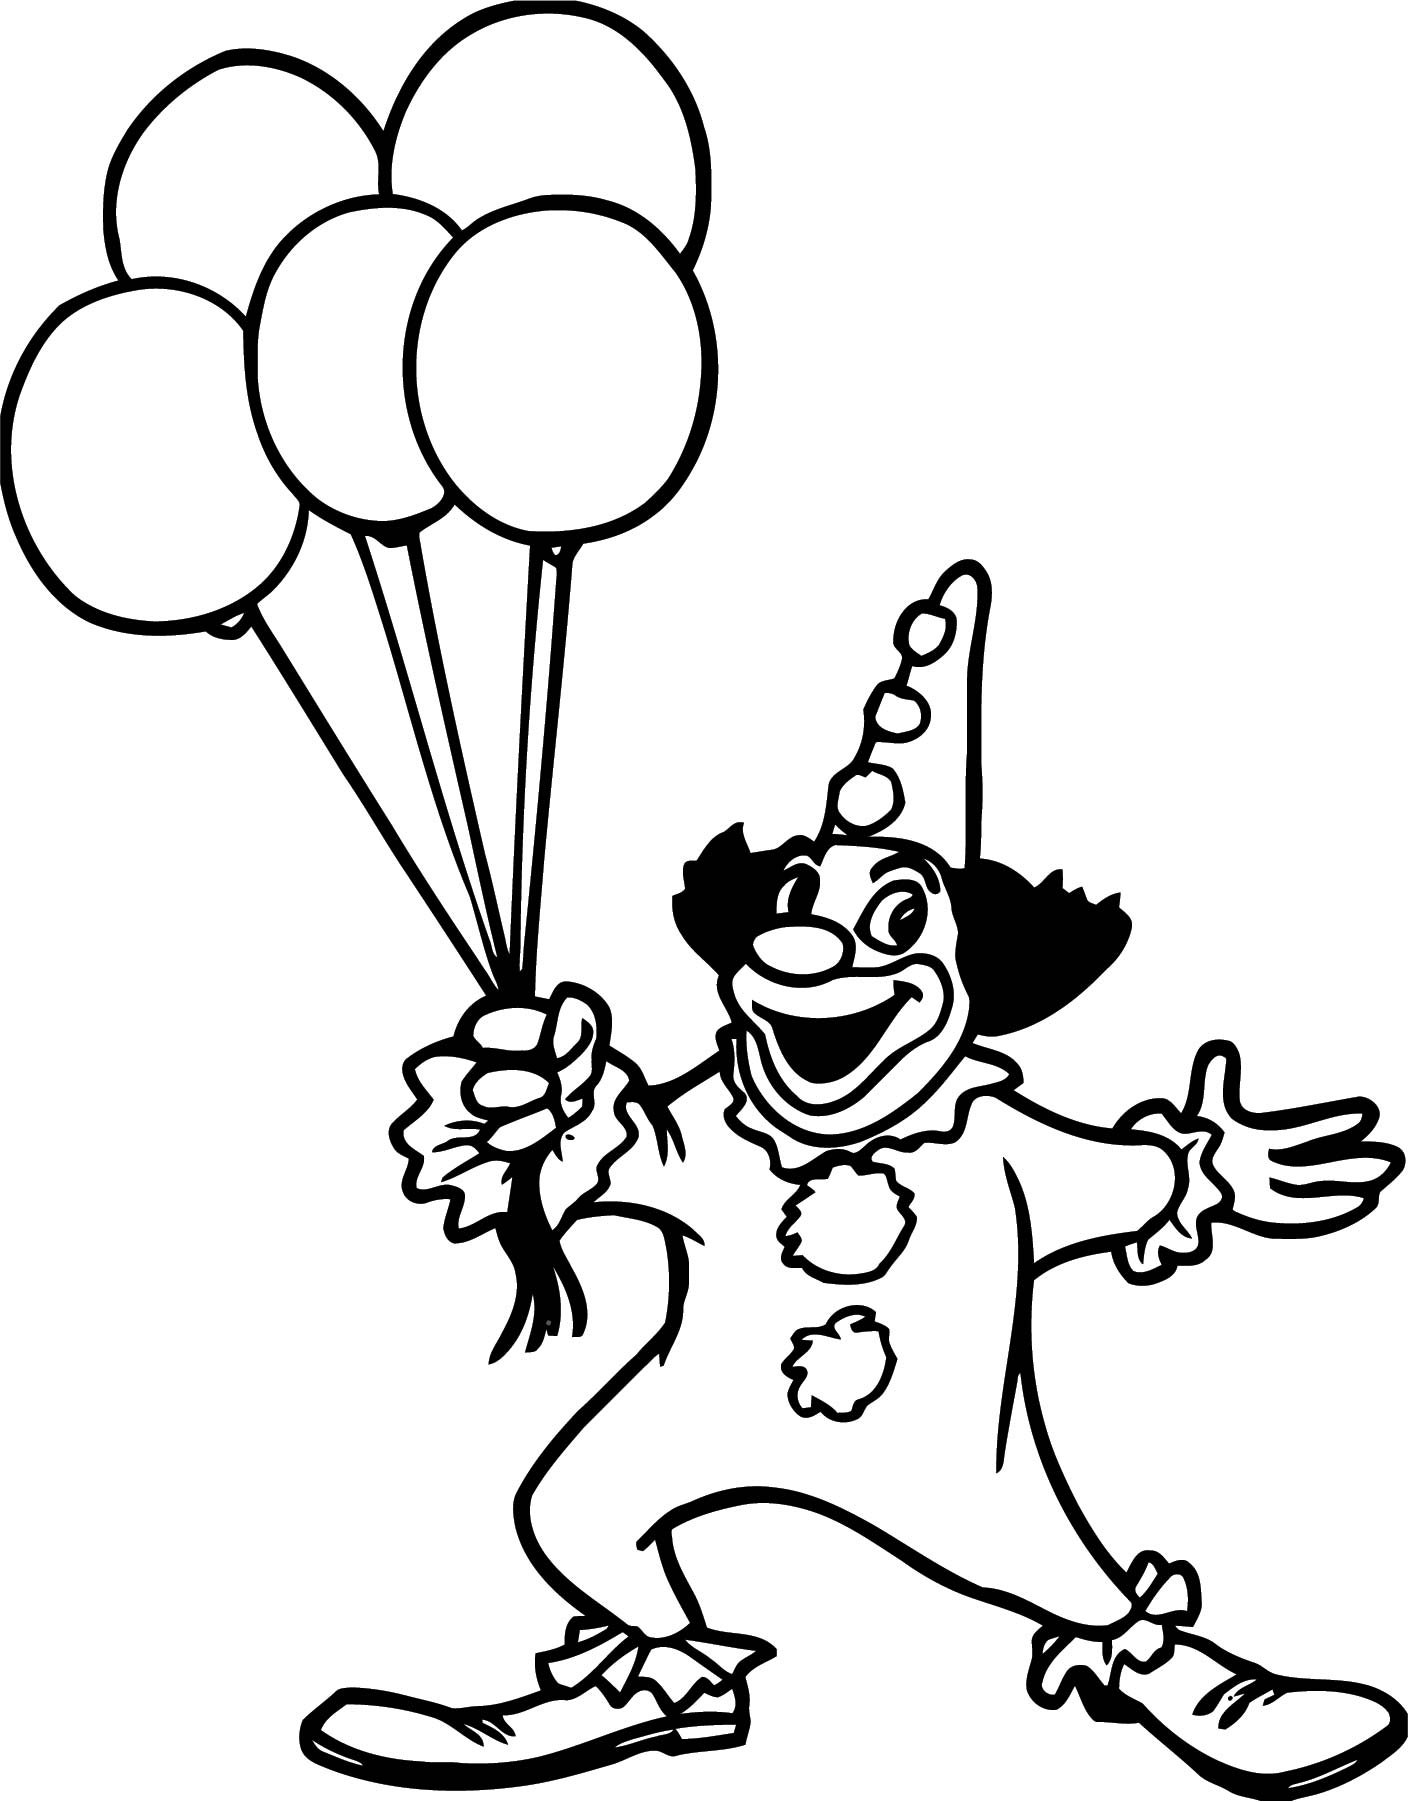 Раскраска клоун для детей 3 4 лет. Клоун раскраска. Клоун раскраска для детей. Веселый клоун раскраска. Раскраска клоун с шариками.